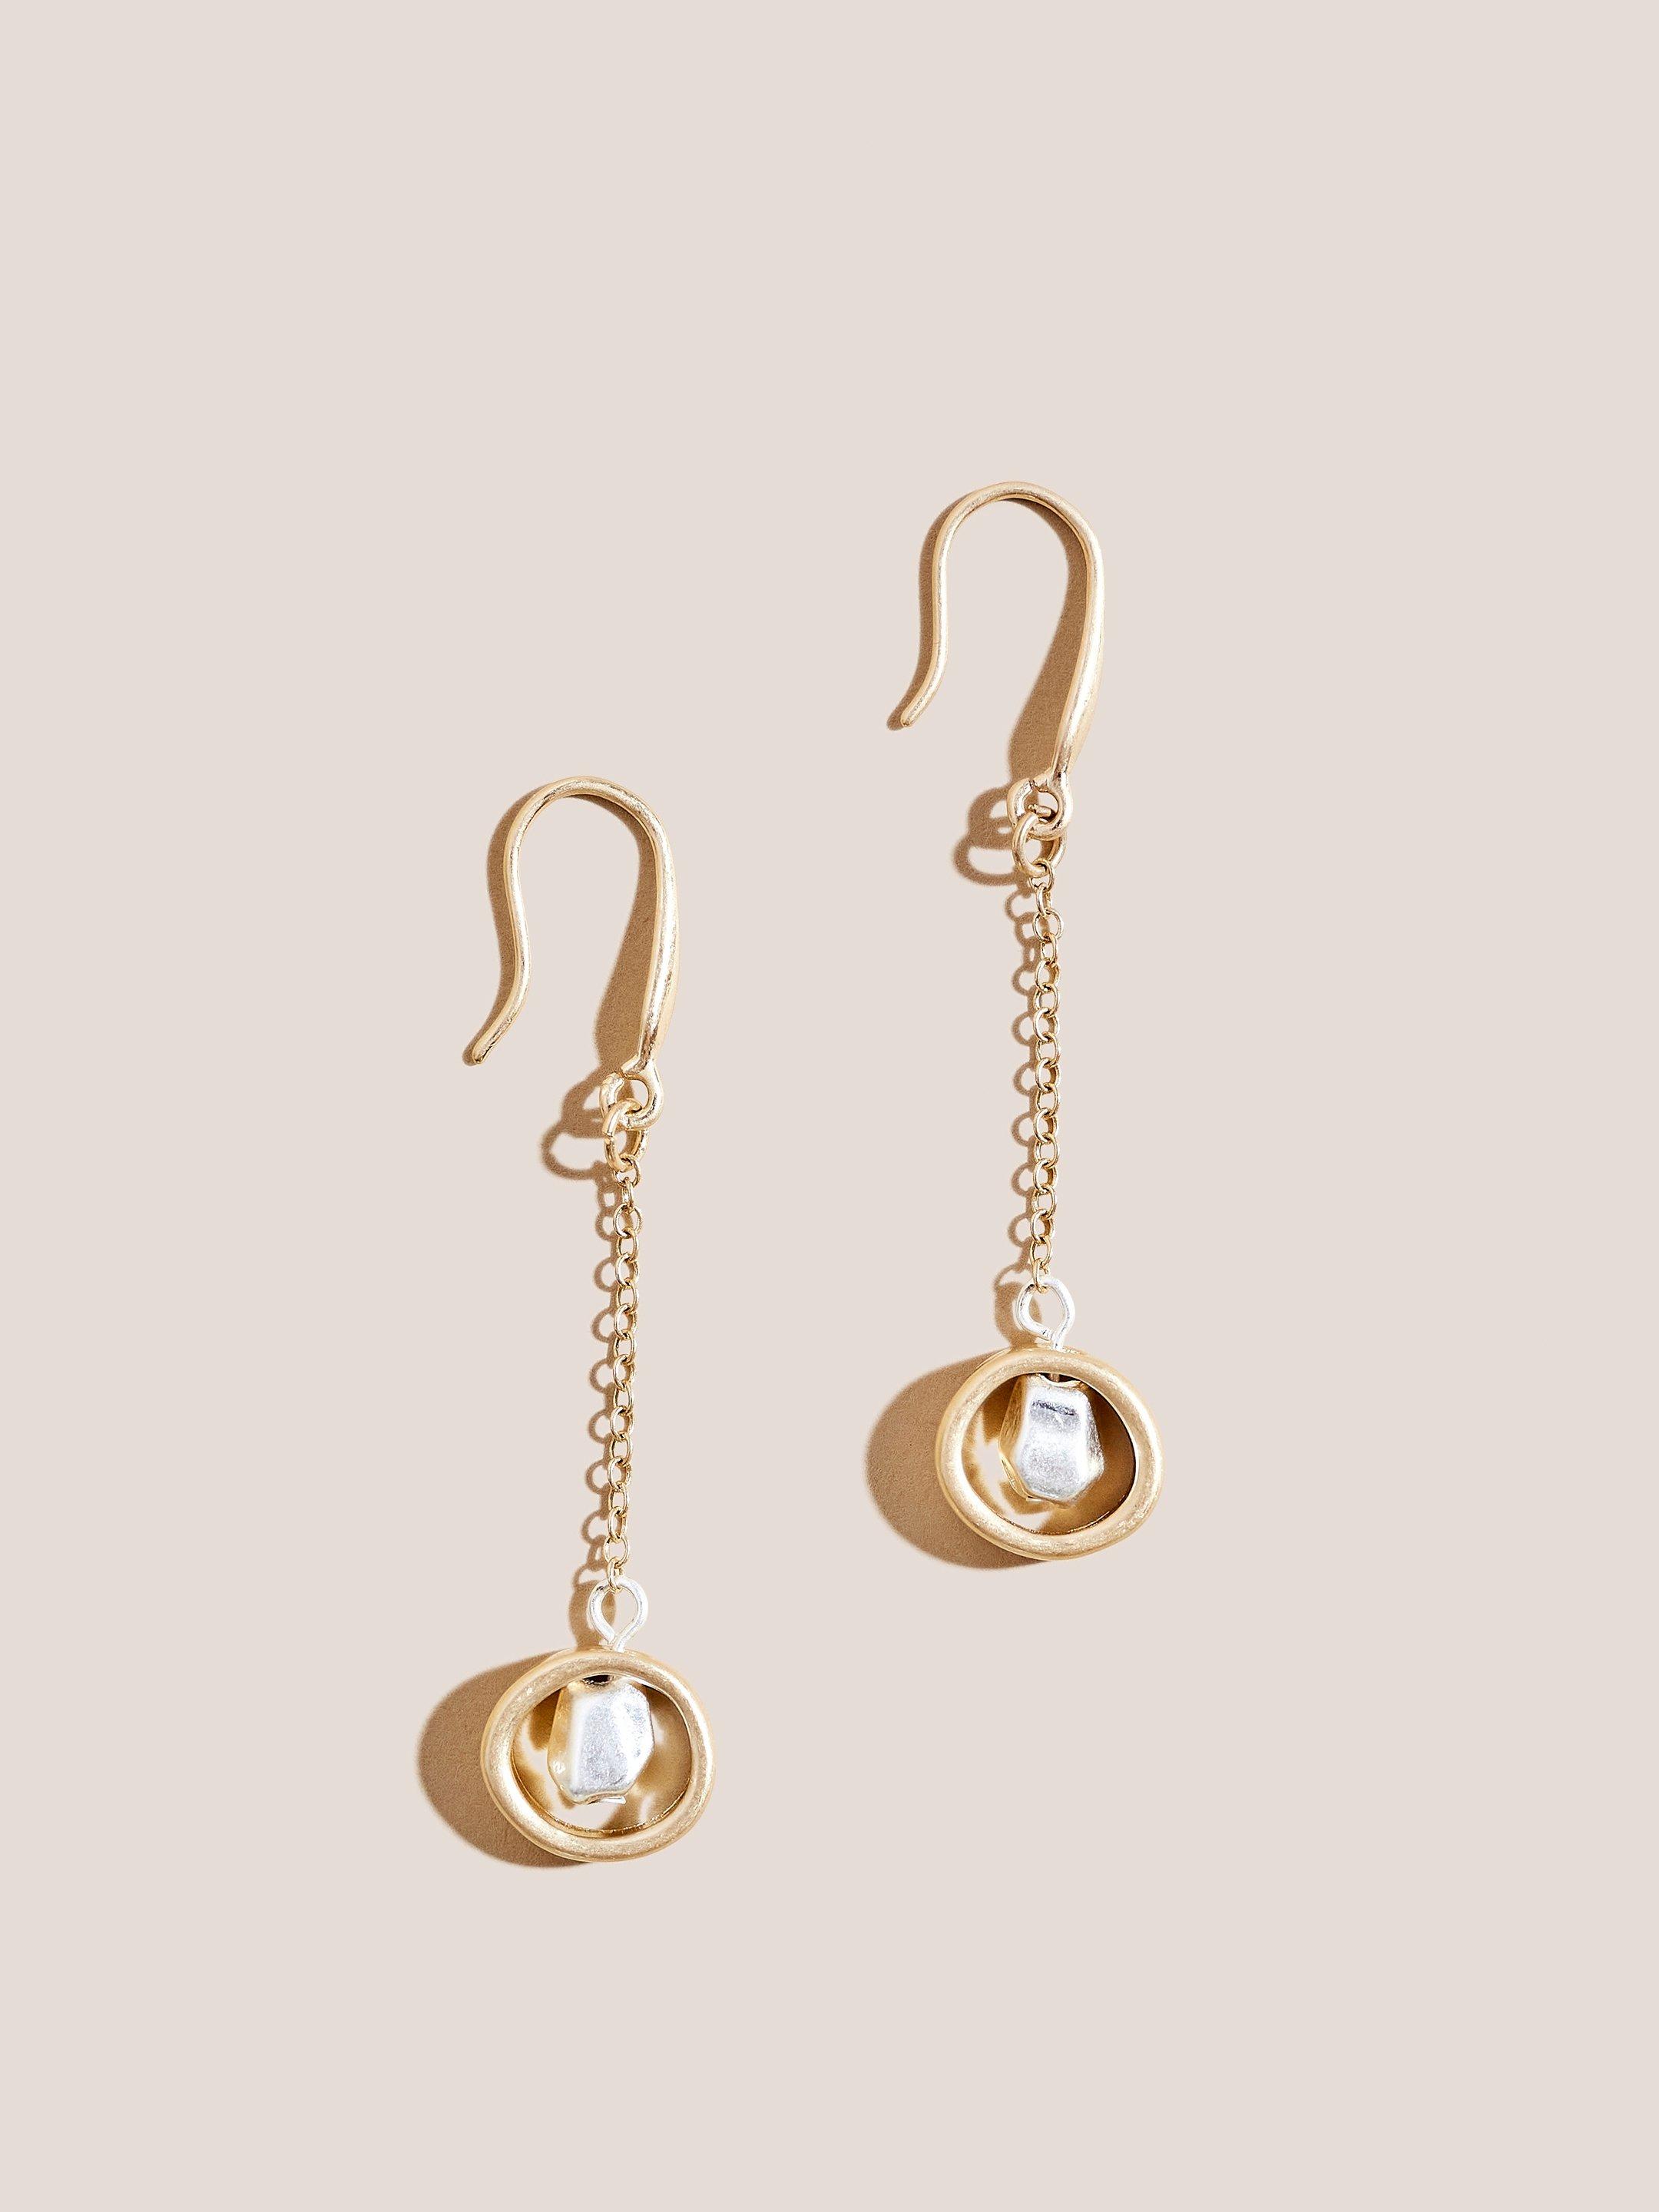 Pearl Drop Circle Earrings in GLD TN MET - FLAT FRONT